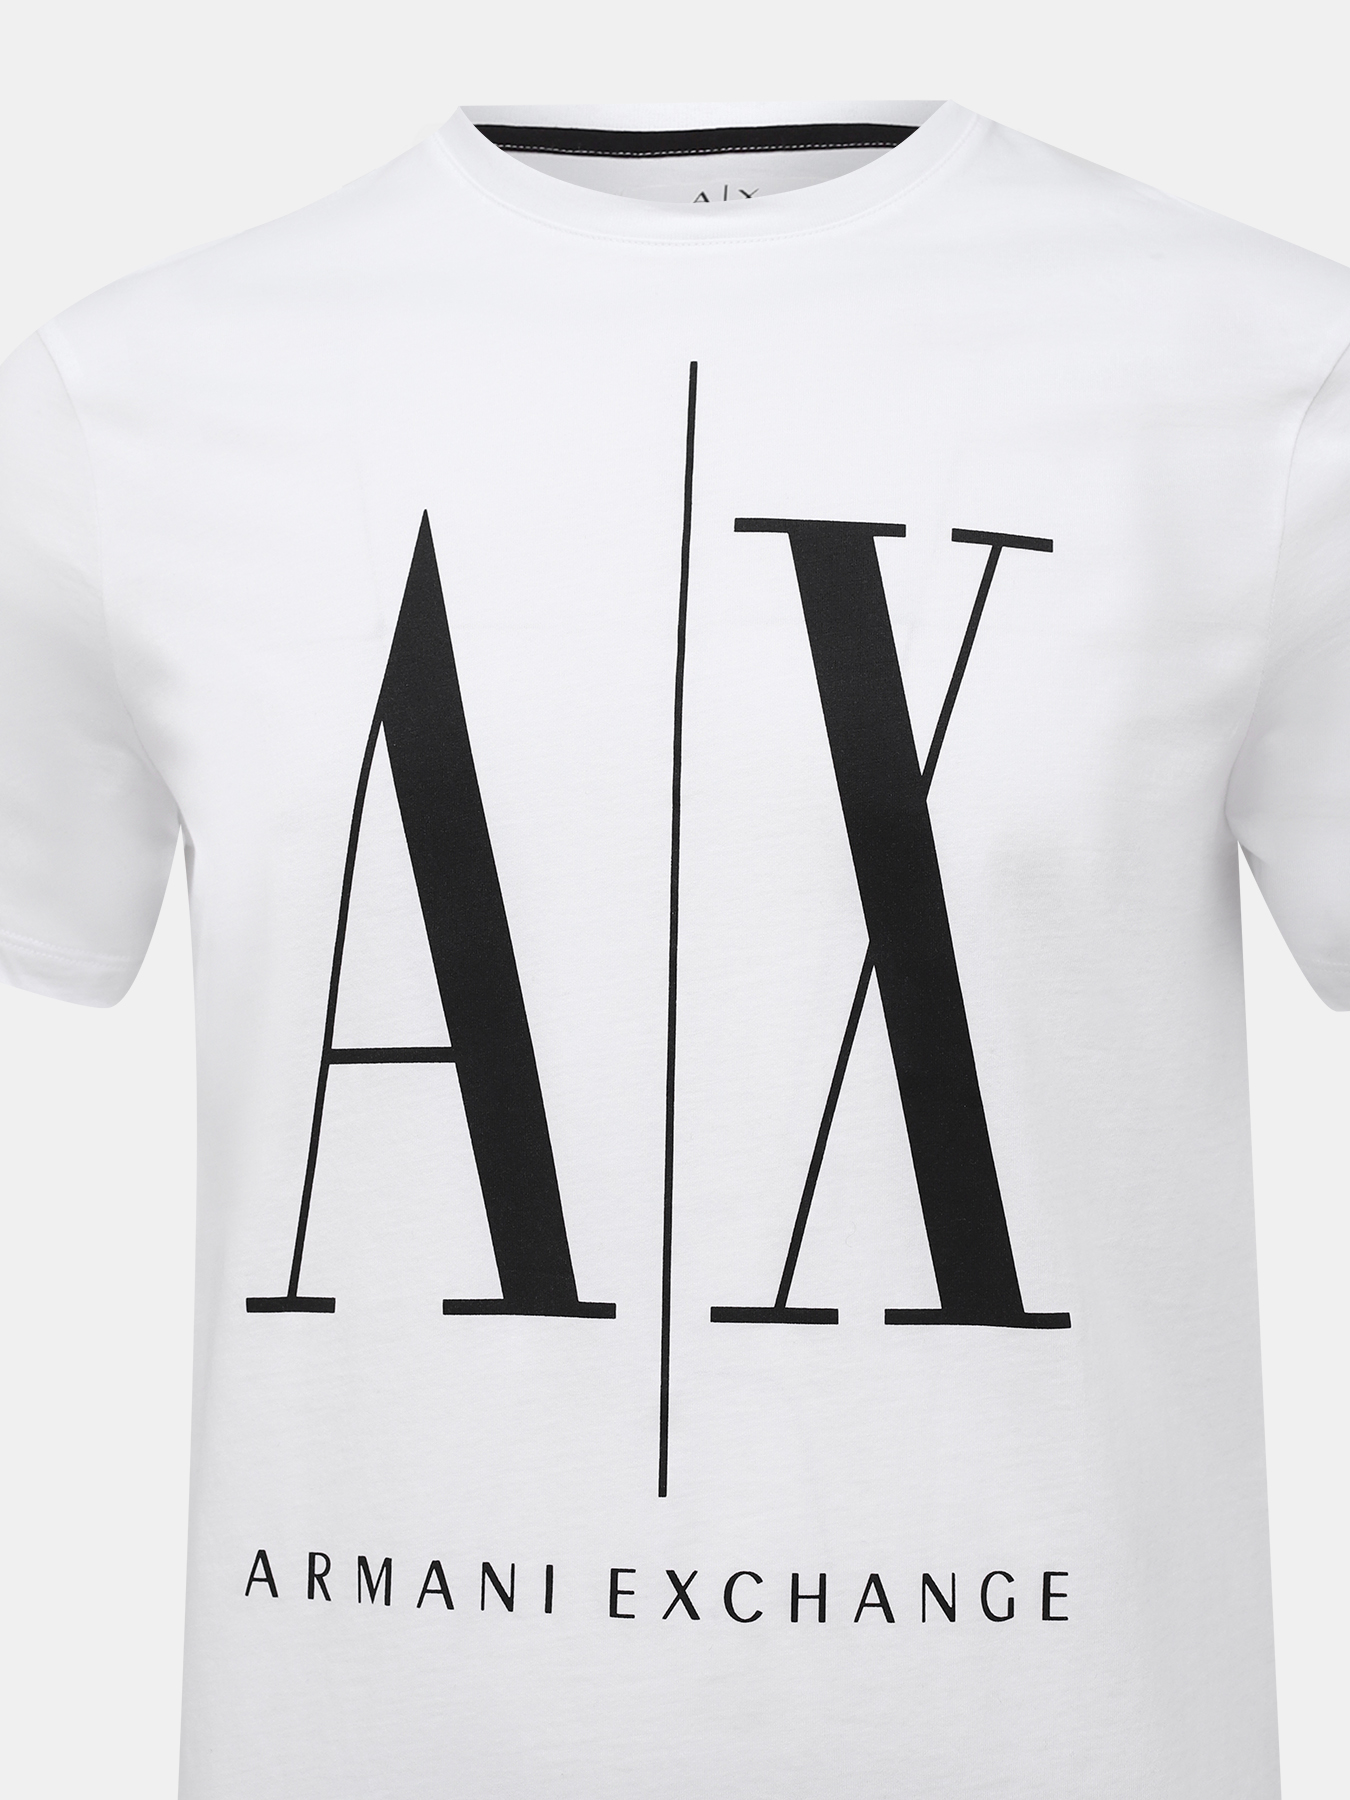 Ты любишь армани. Armani Exchange футболка мужская белая. Armani Exchange футболка мужская черная. Armani Exchange интернет магазин. Эмблема Армани на одежду.